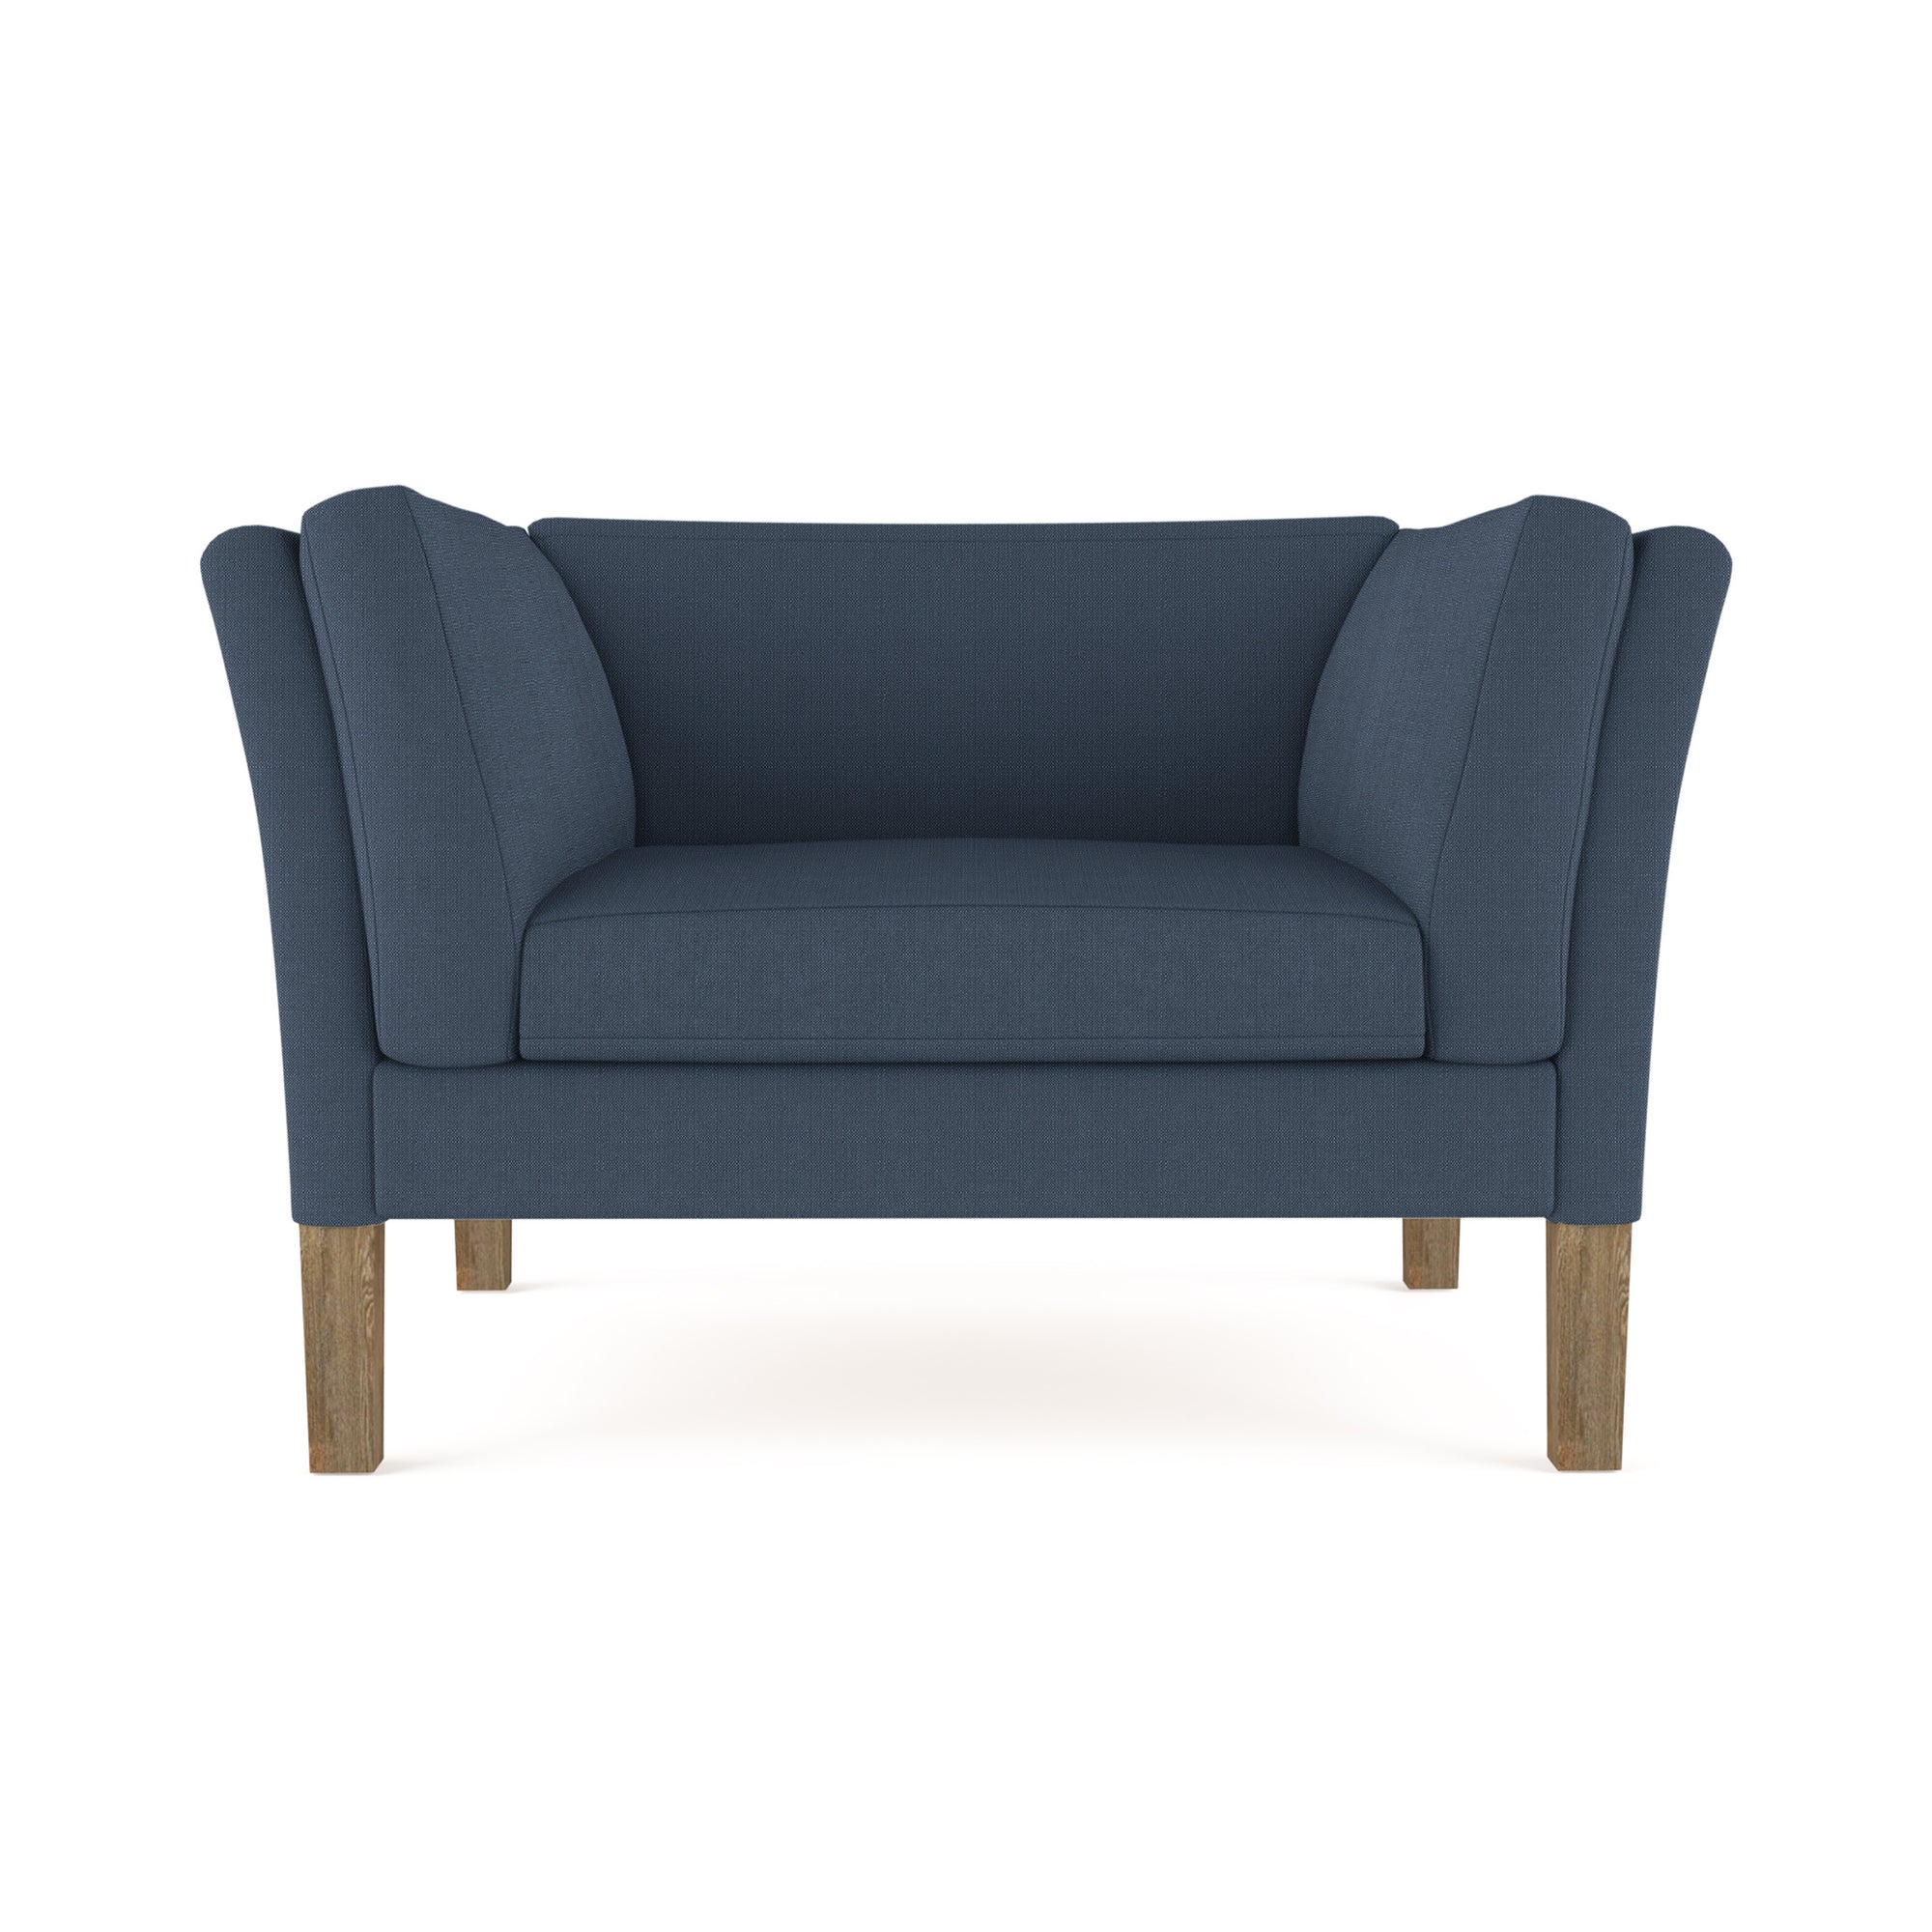 Charlton Chair - Bluebell Box Weave Linen